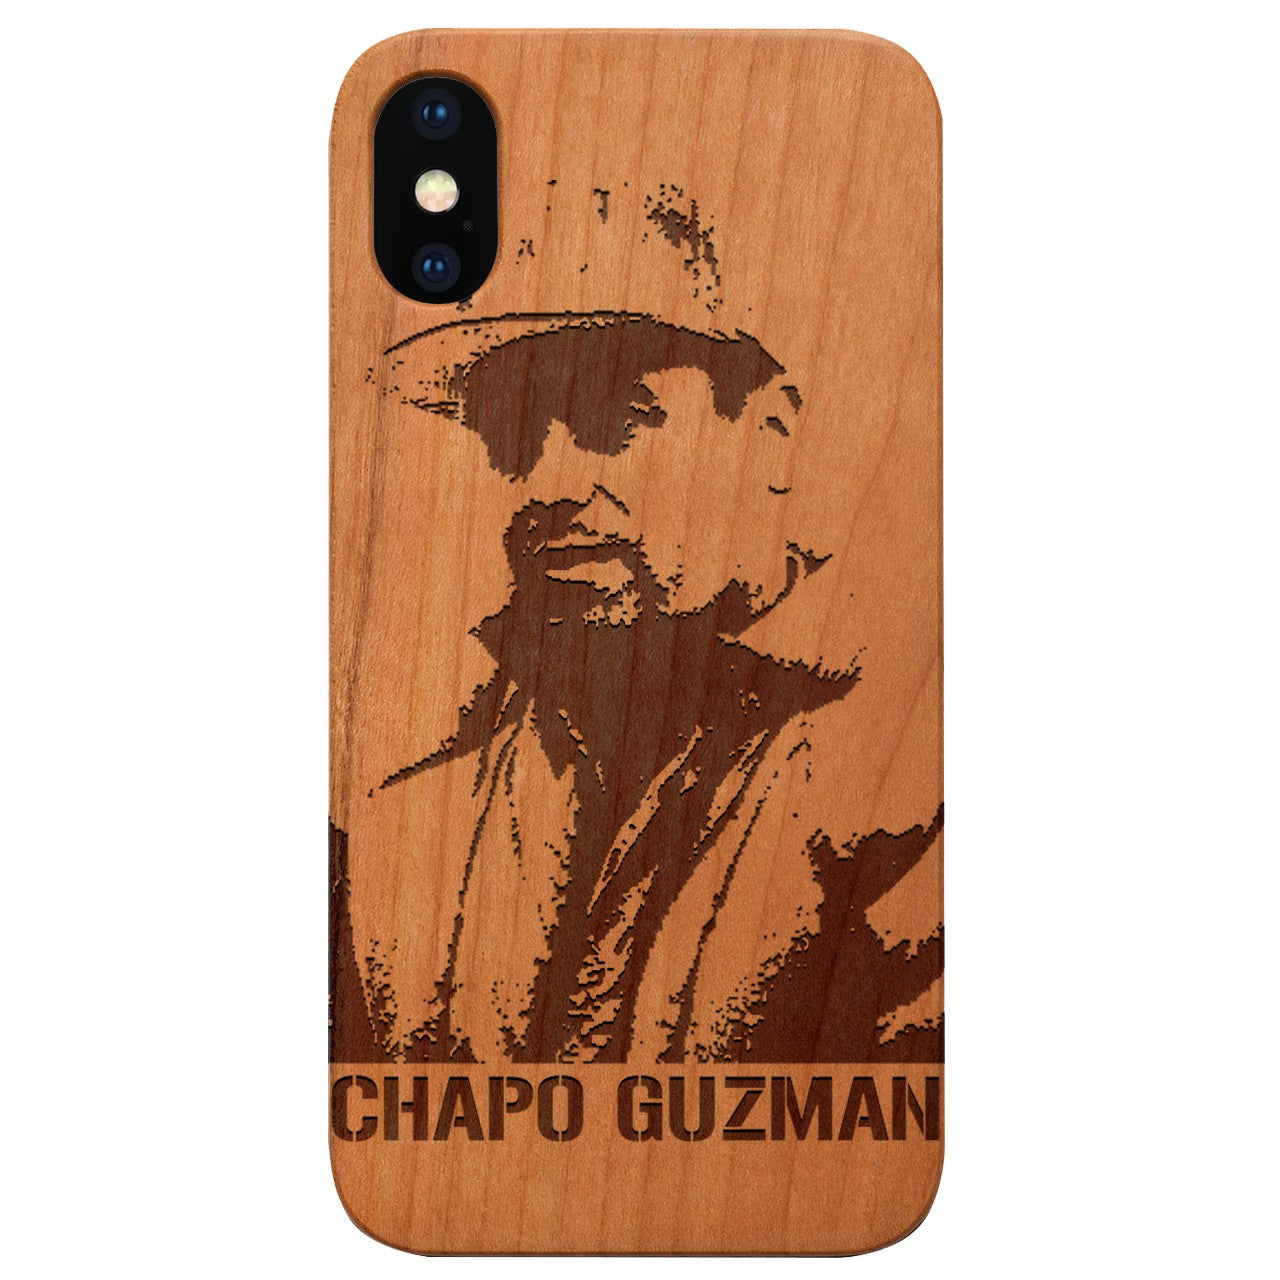  Chapo Guzman - Engraved - Wooden Phone Case - IPhone 13 Models